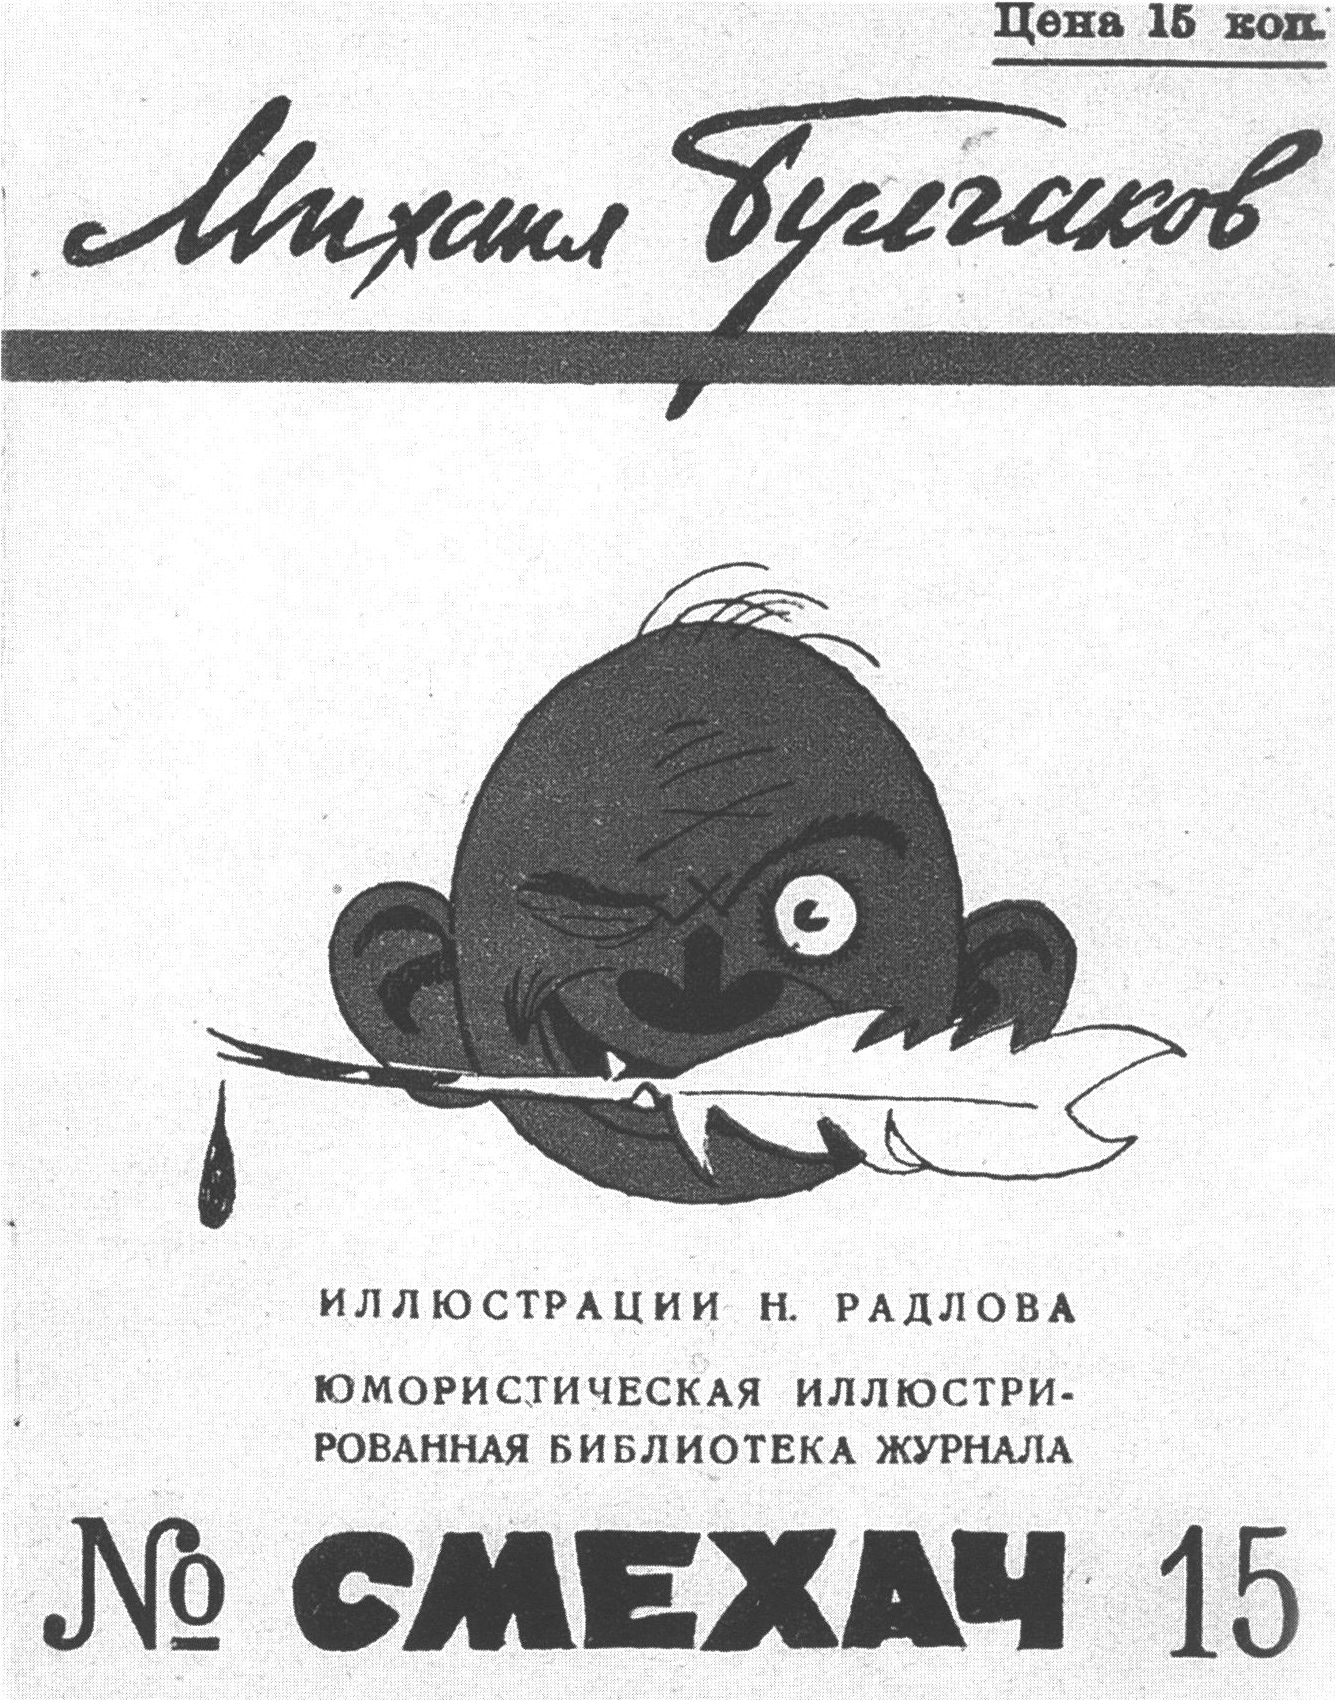 Обложка сборника рассказов М.А. Булгакова. 1926